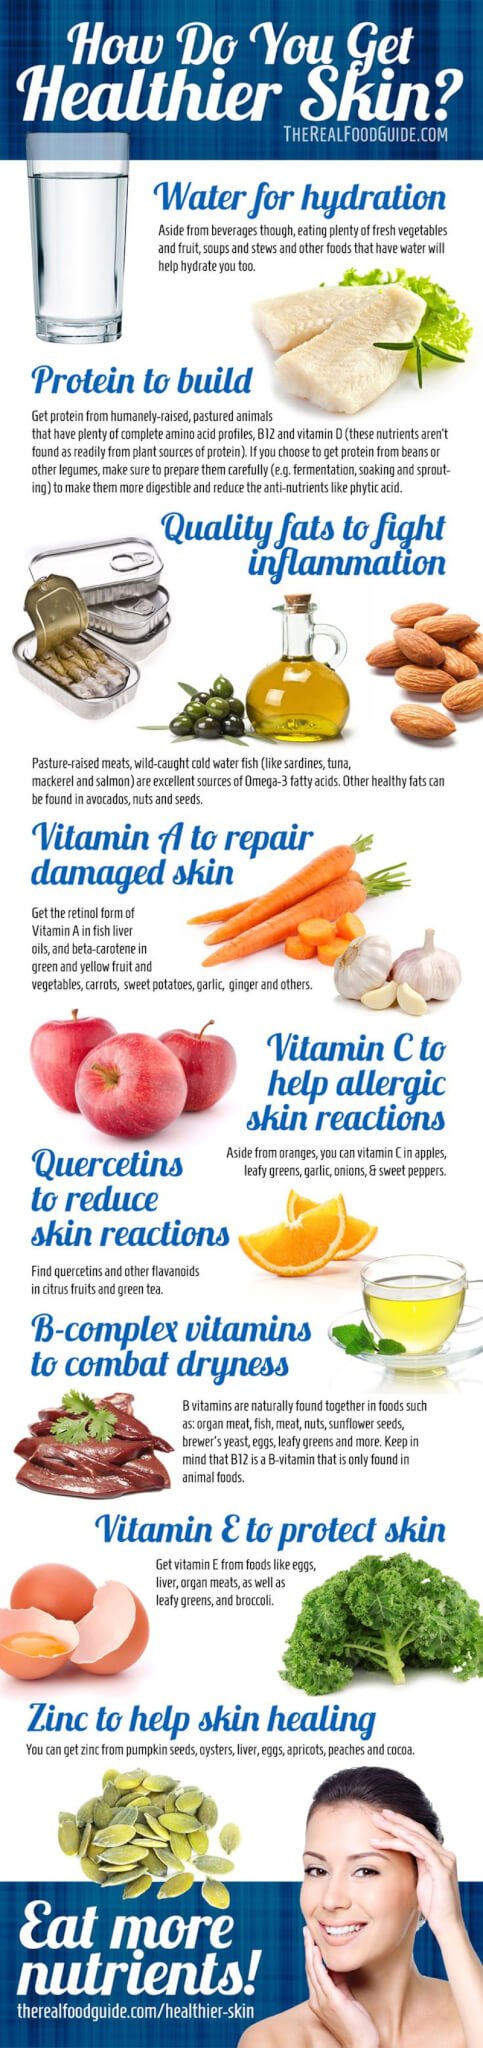 How do you get healthier skin infographic